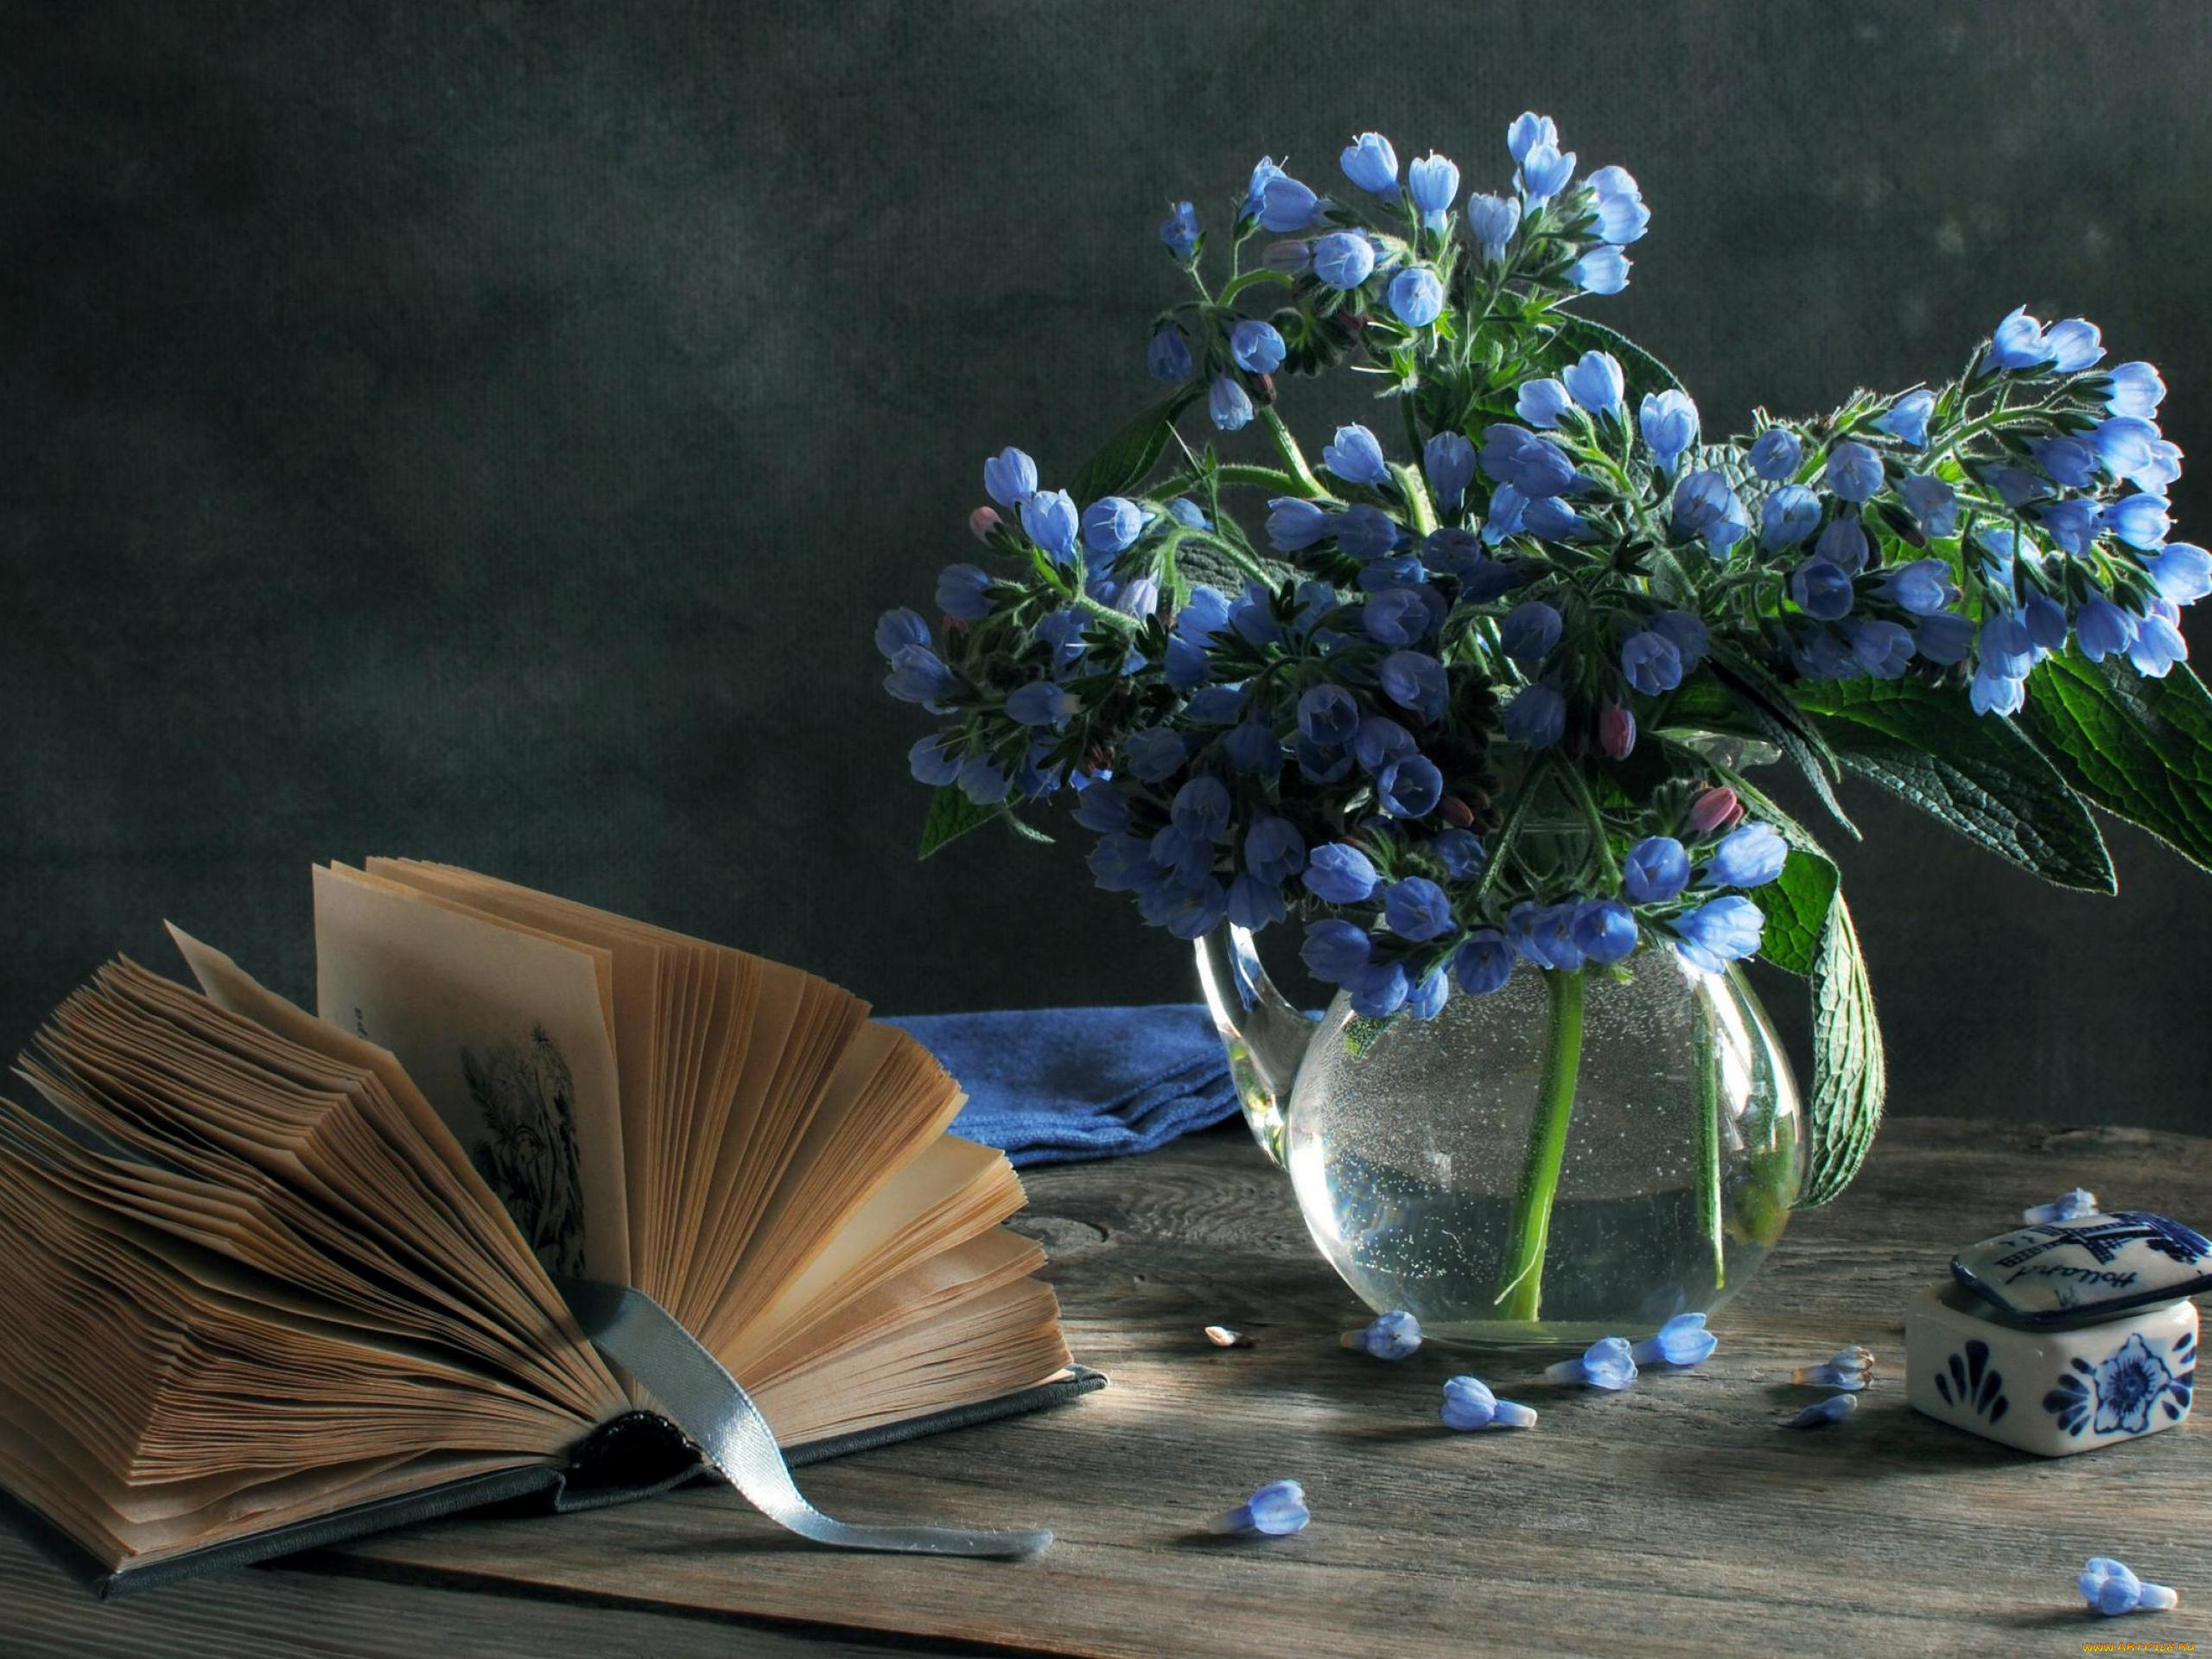 цветы, луговые, полевые, натюрморт, лента, голубые, ваза, книга, шкатулка, закладка